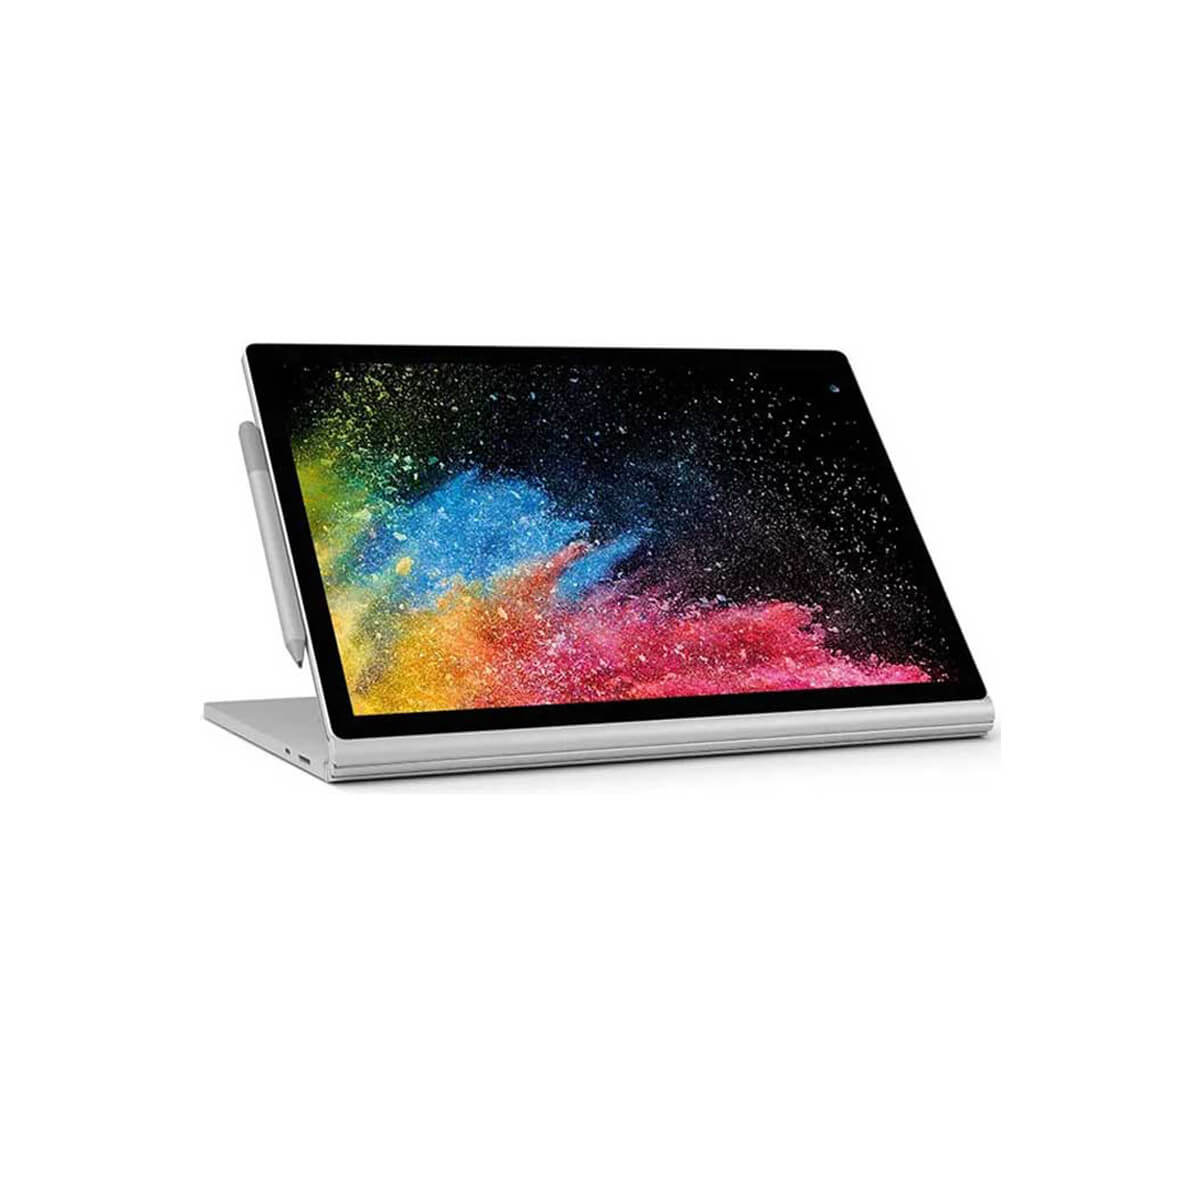 New Microsoft Surface models